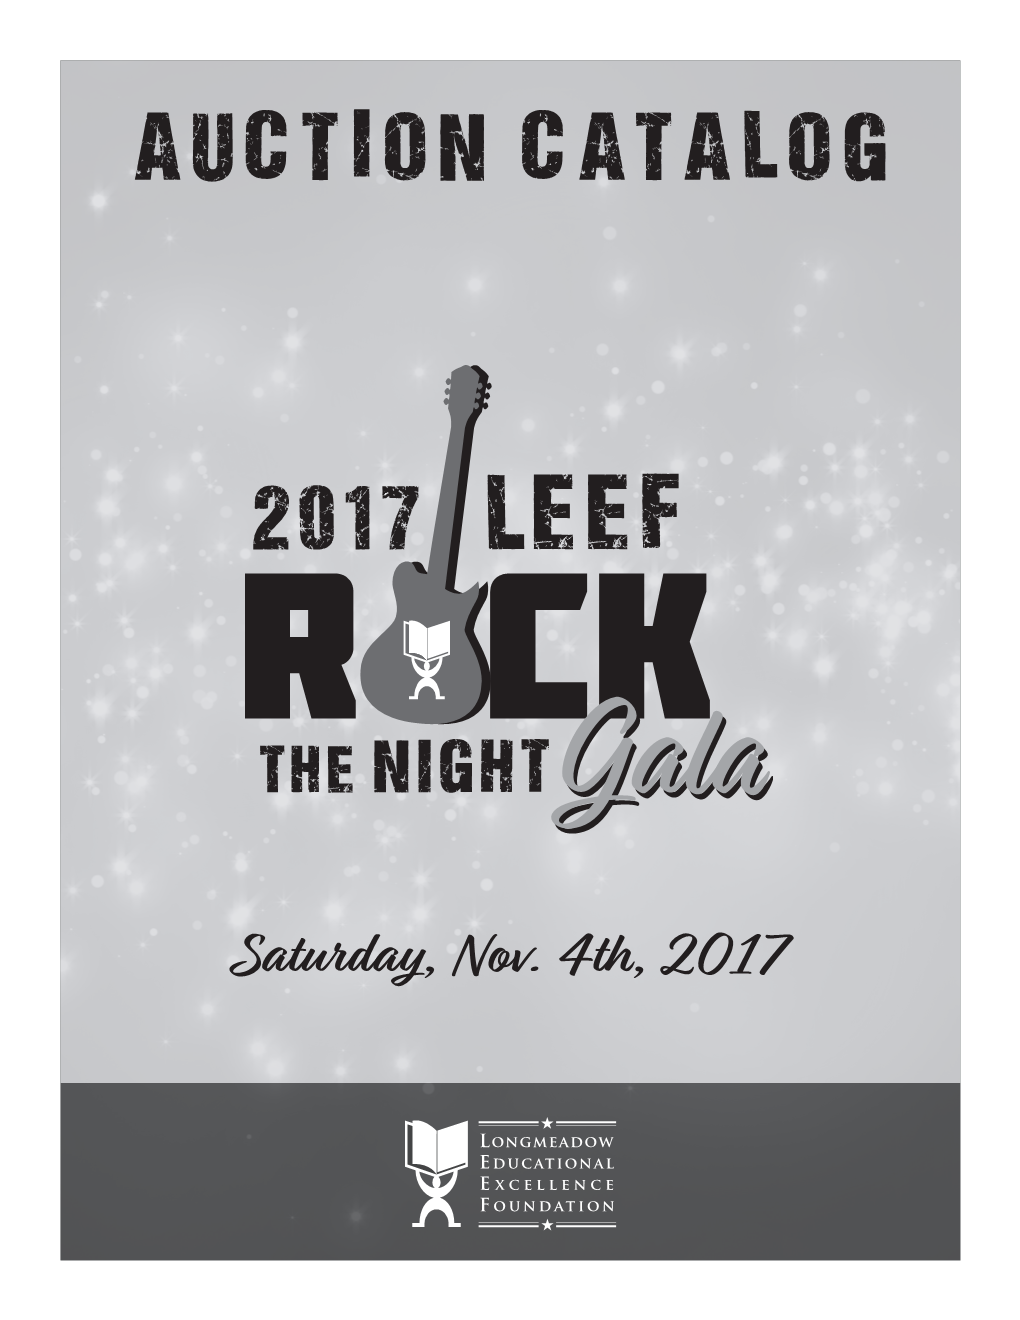 LEEF Gala Auction Catalog